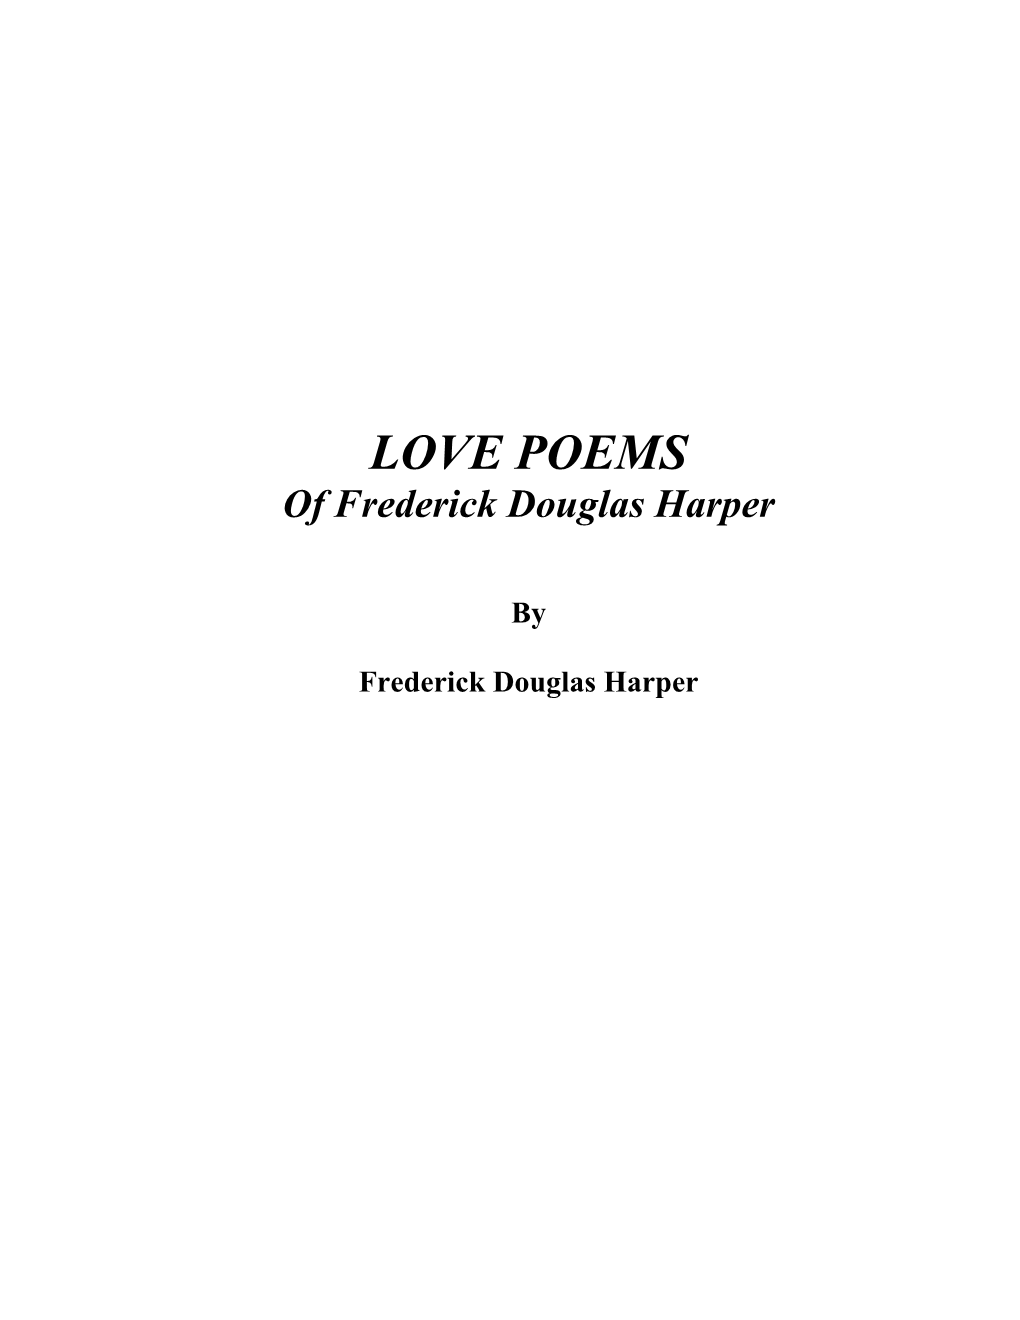 LOVE POEMS of Frederick Douglas Harper